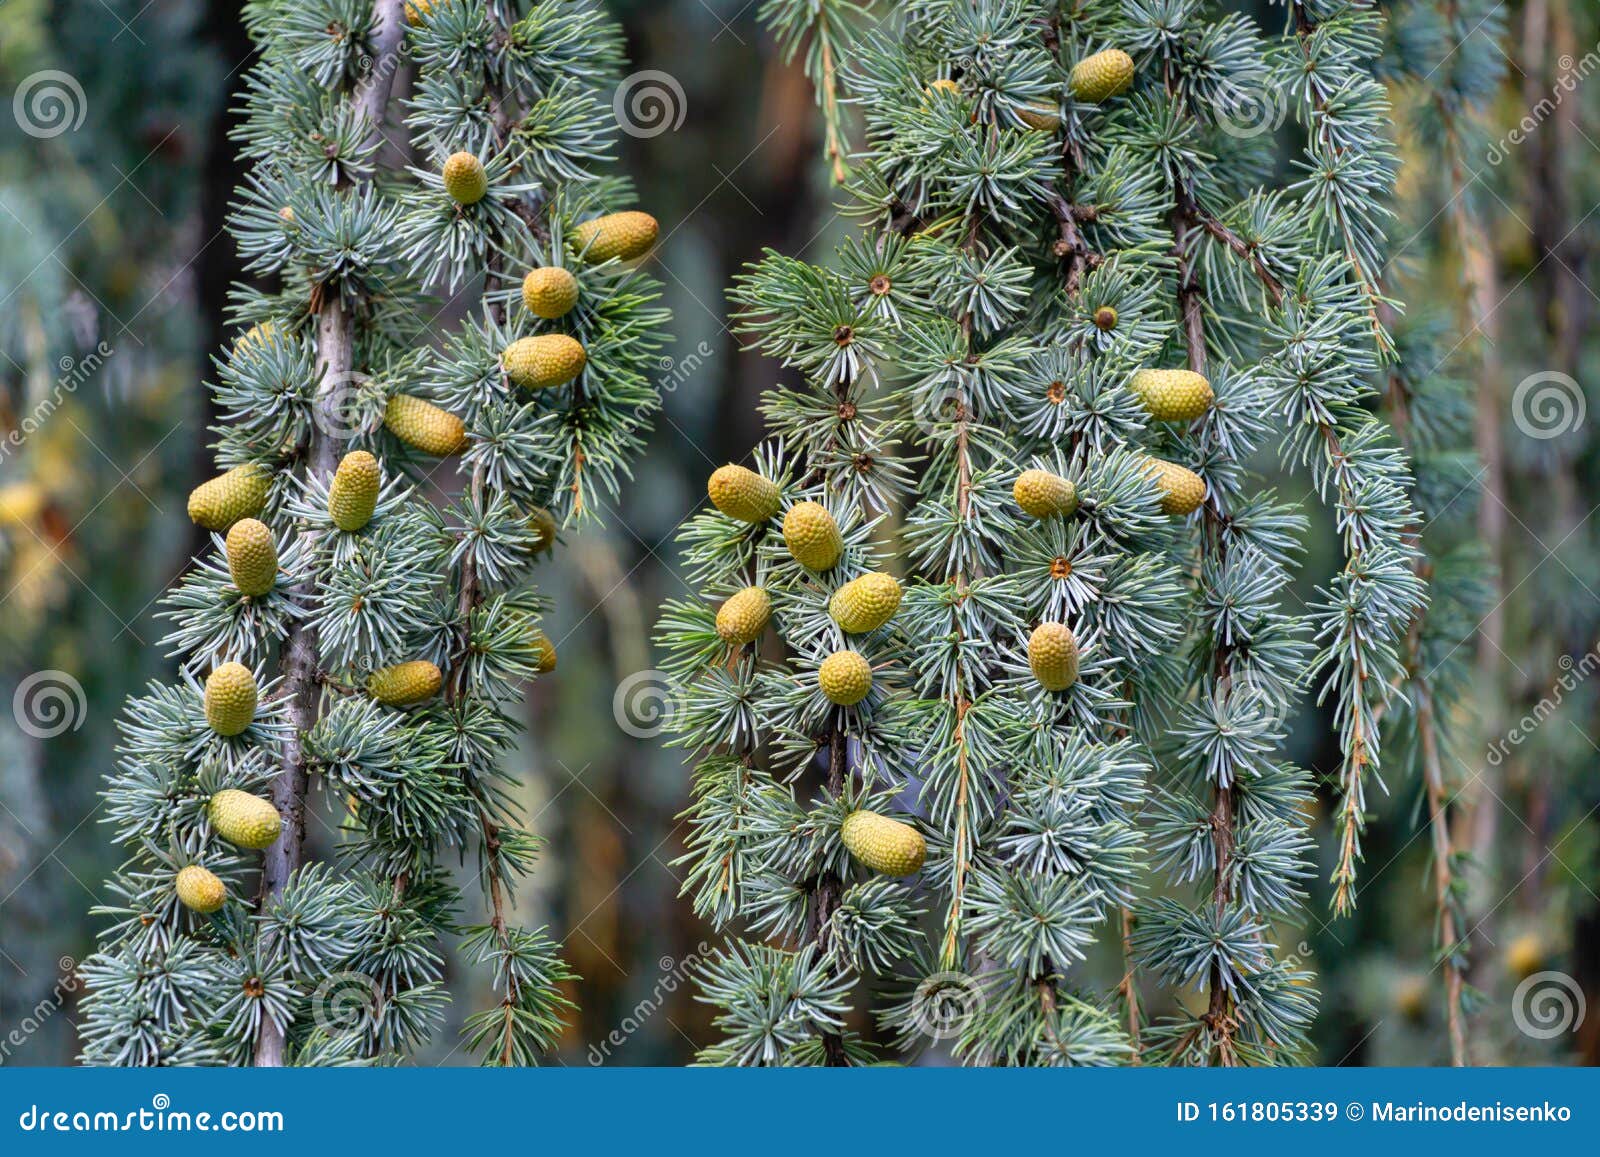 close-up of branches and cones of majestic weeping blue atlas cedar cedrus atlantica glauca pendula